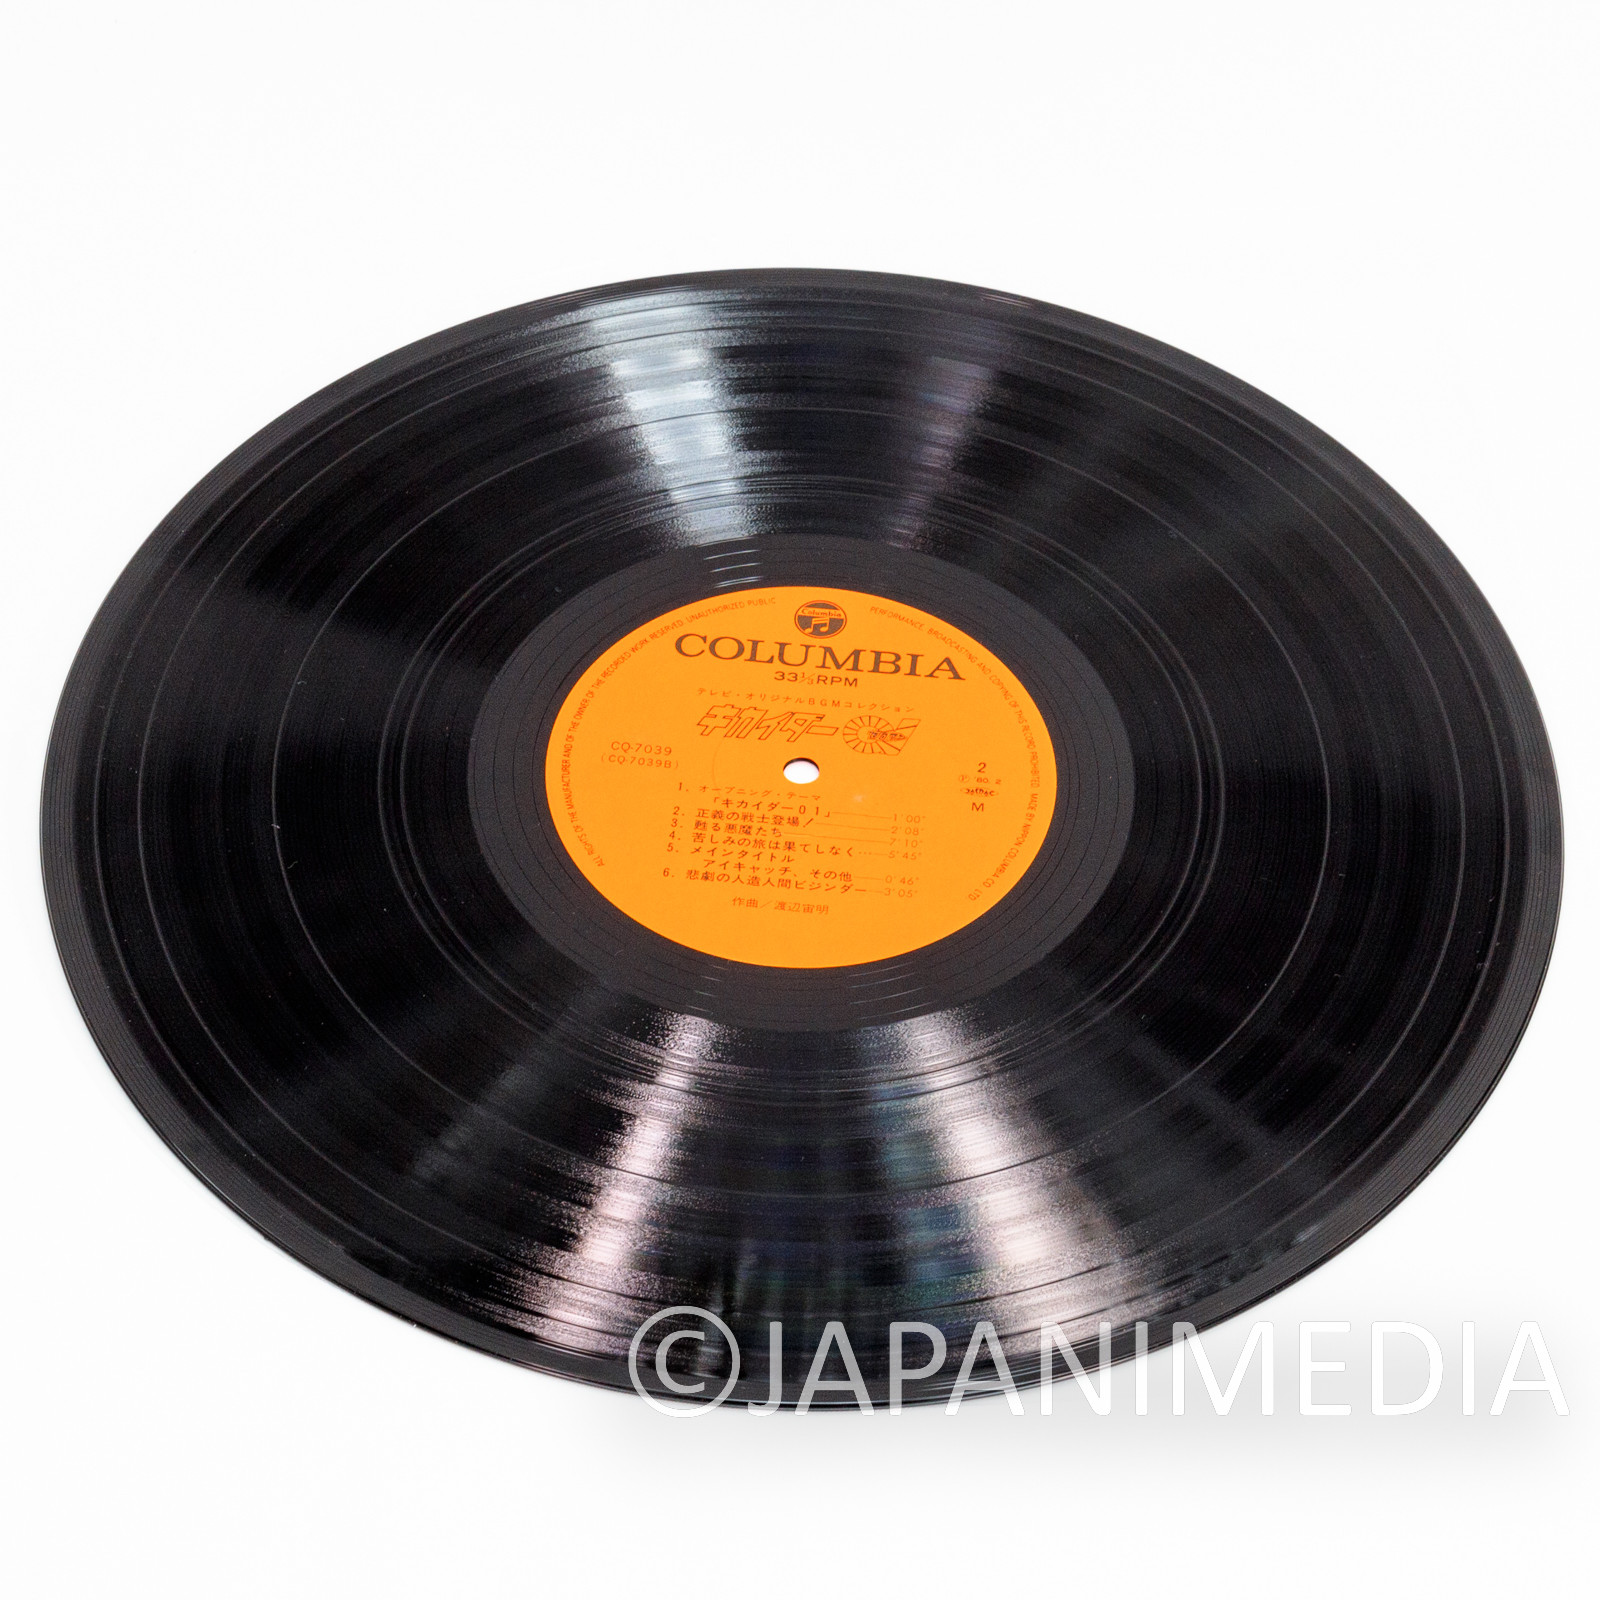 Android Kikaider / Kikaider 01 TV BGM Collection 12" Vinyl LP Record CQ-7039